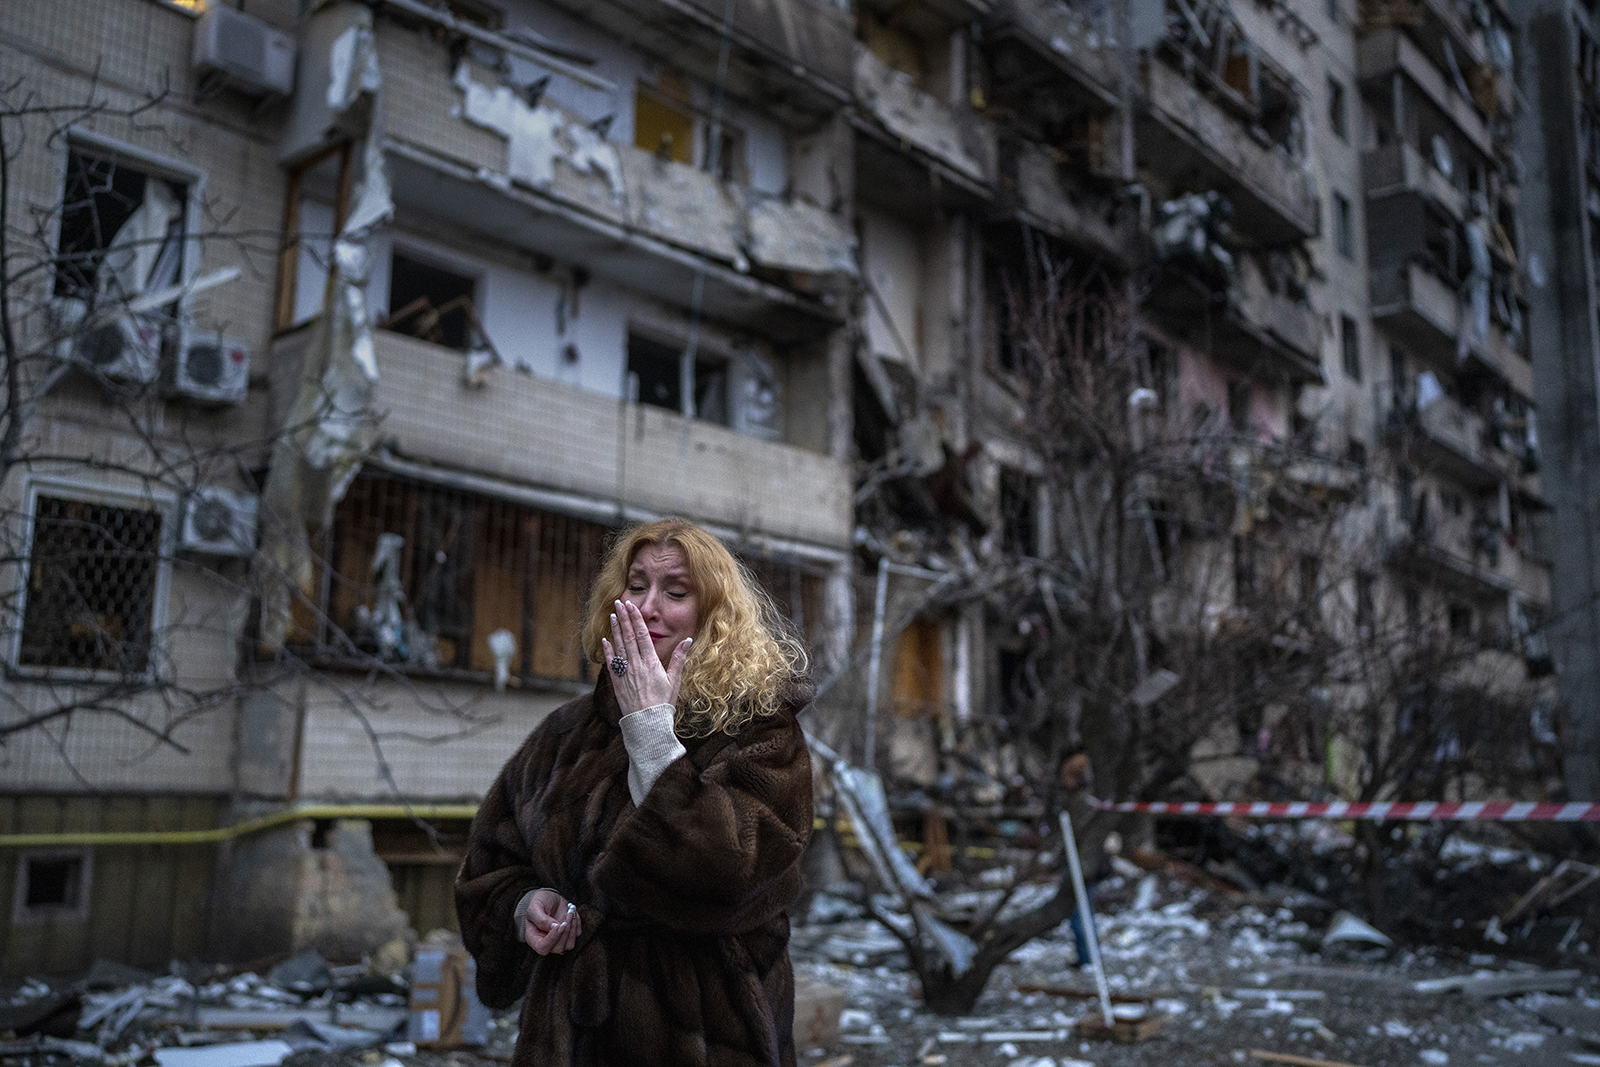 Natali Sevriukova reacts to seeing her residence following a rocket attack in Kyiv, Ukraine, Friday, Feb. 25, 2022. (AP Photo/Emilio Morenatti)